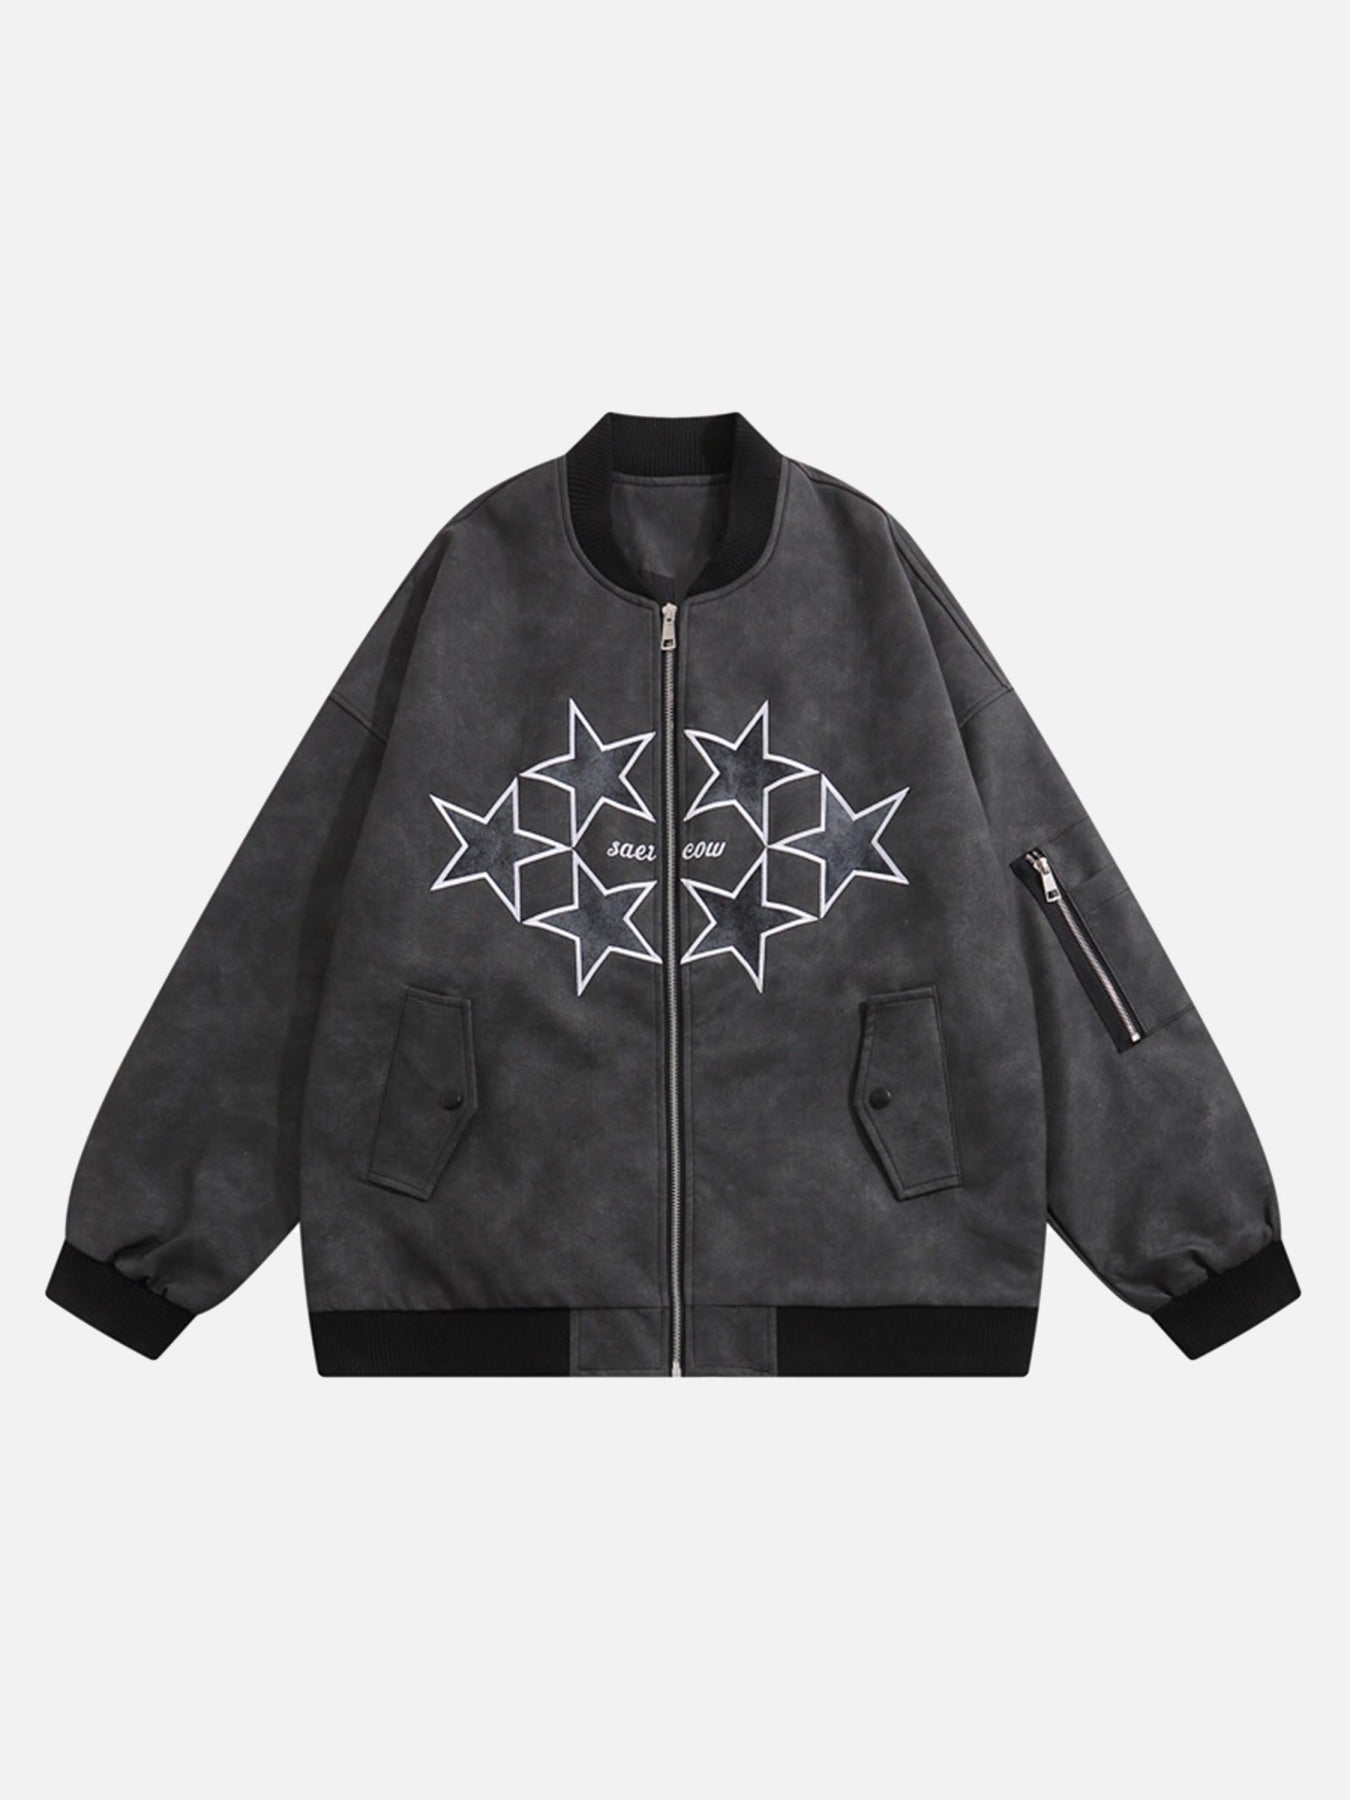 The Supermade Pentagram Embroidered Leather Jacket